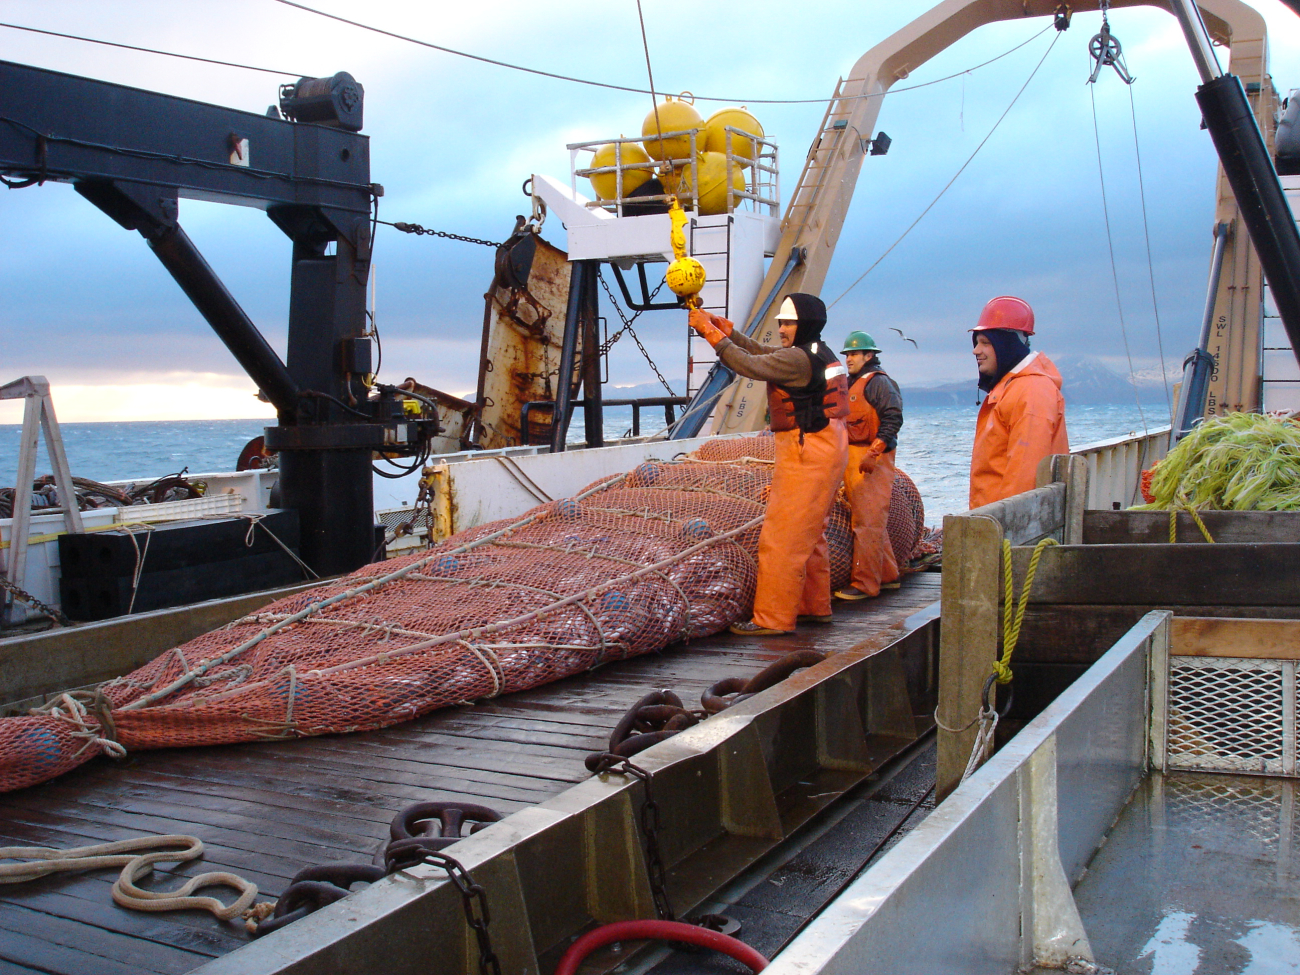 A full cod end of the trawl net